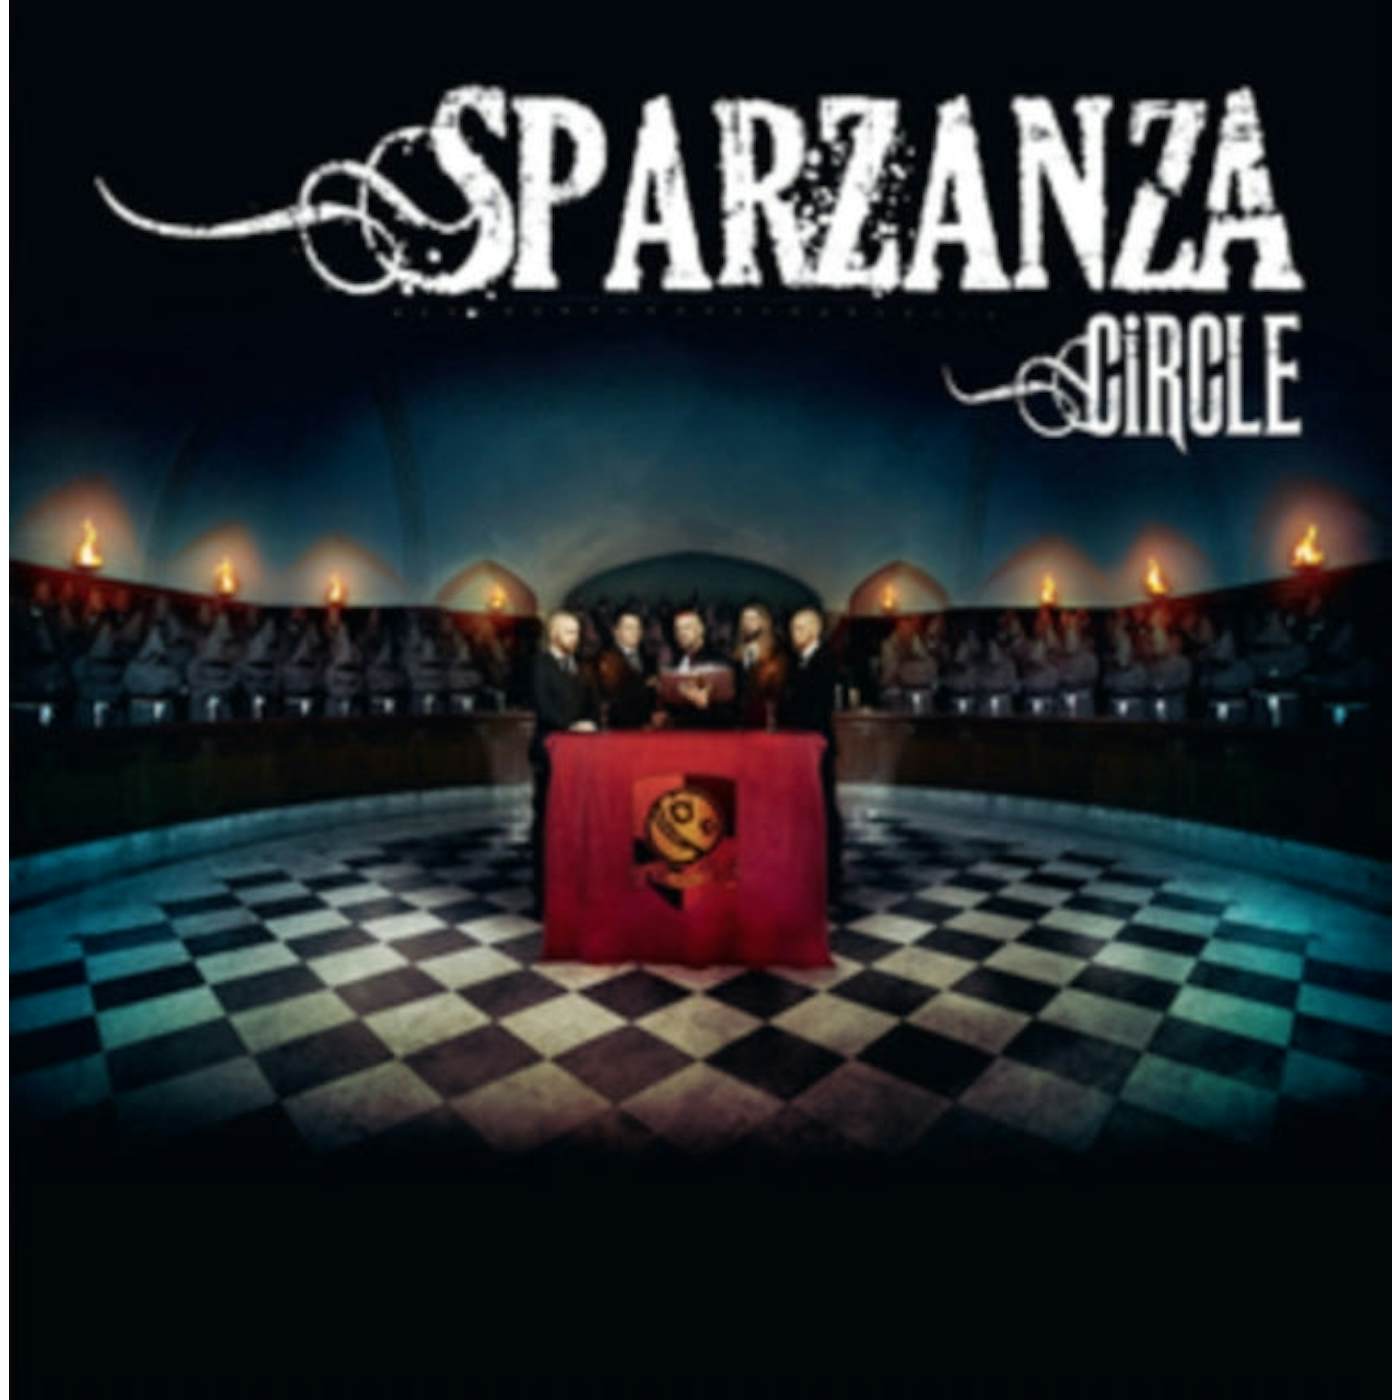 Sparzanza LP - Circle (Vinyl)